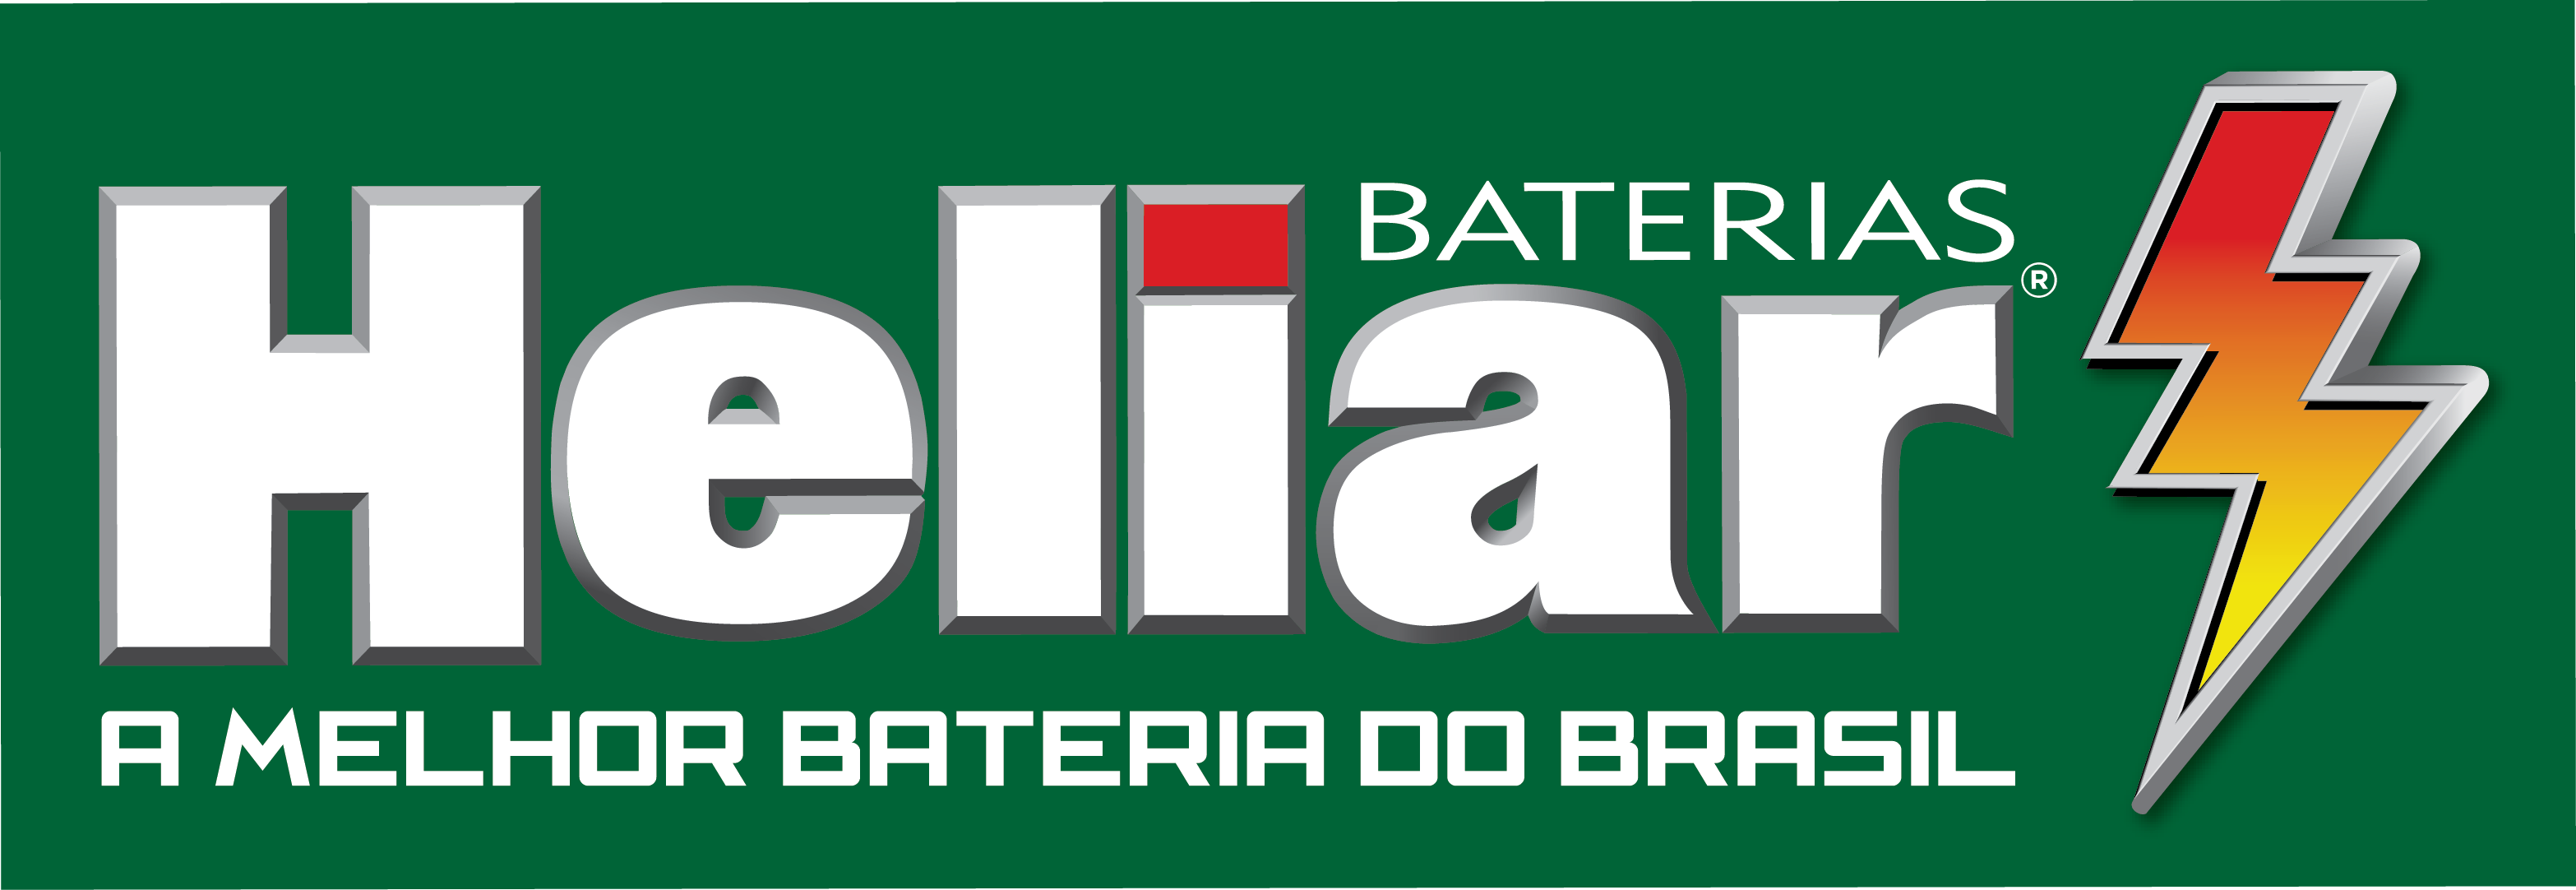 Baterias Heliar Logo photo - 1